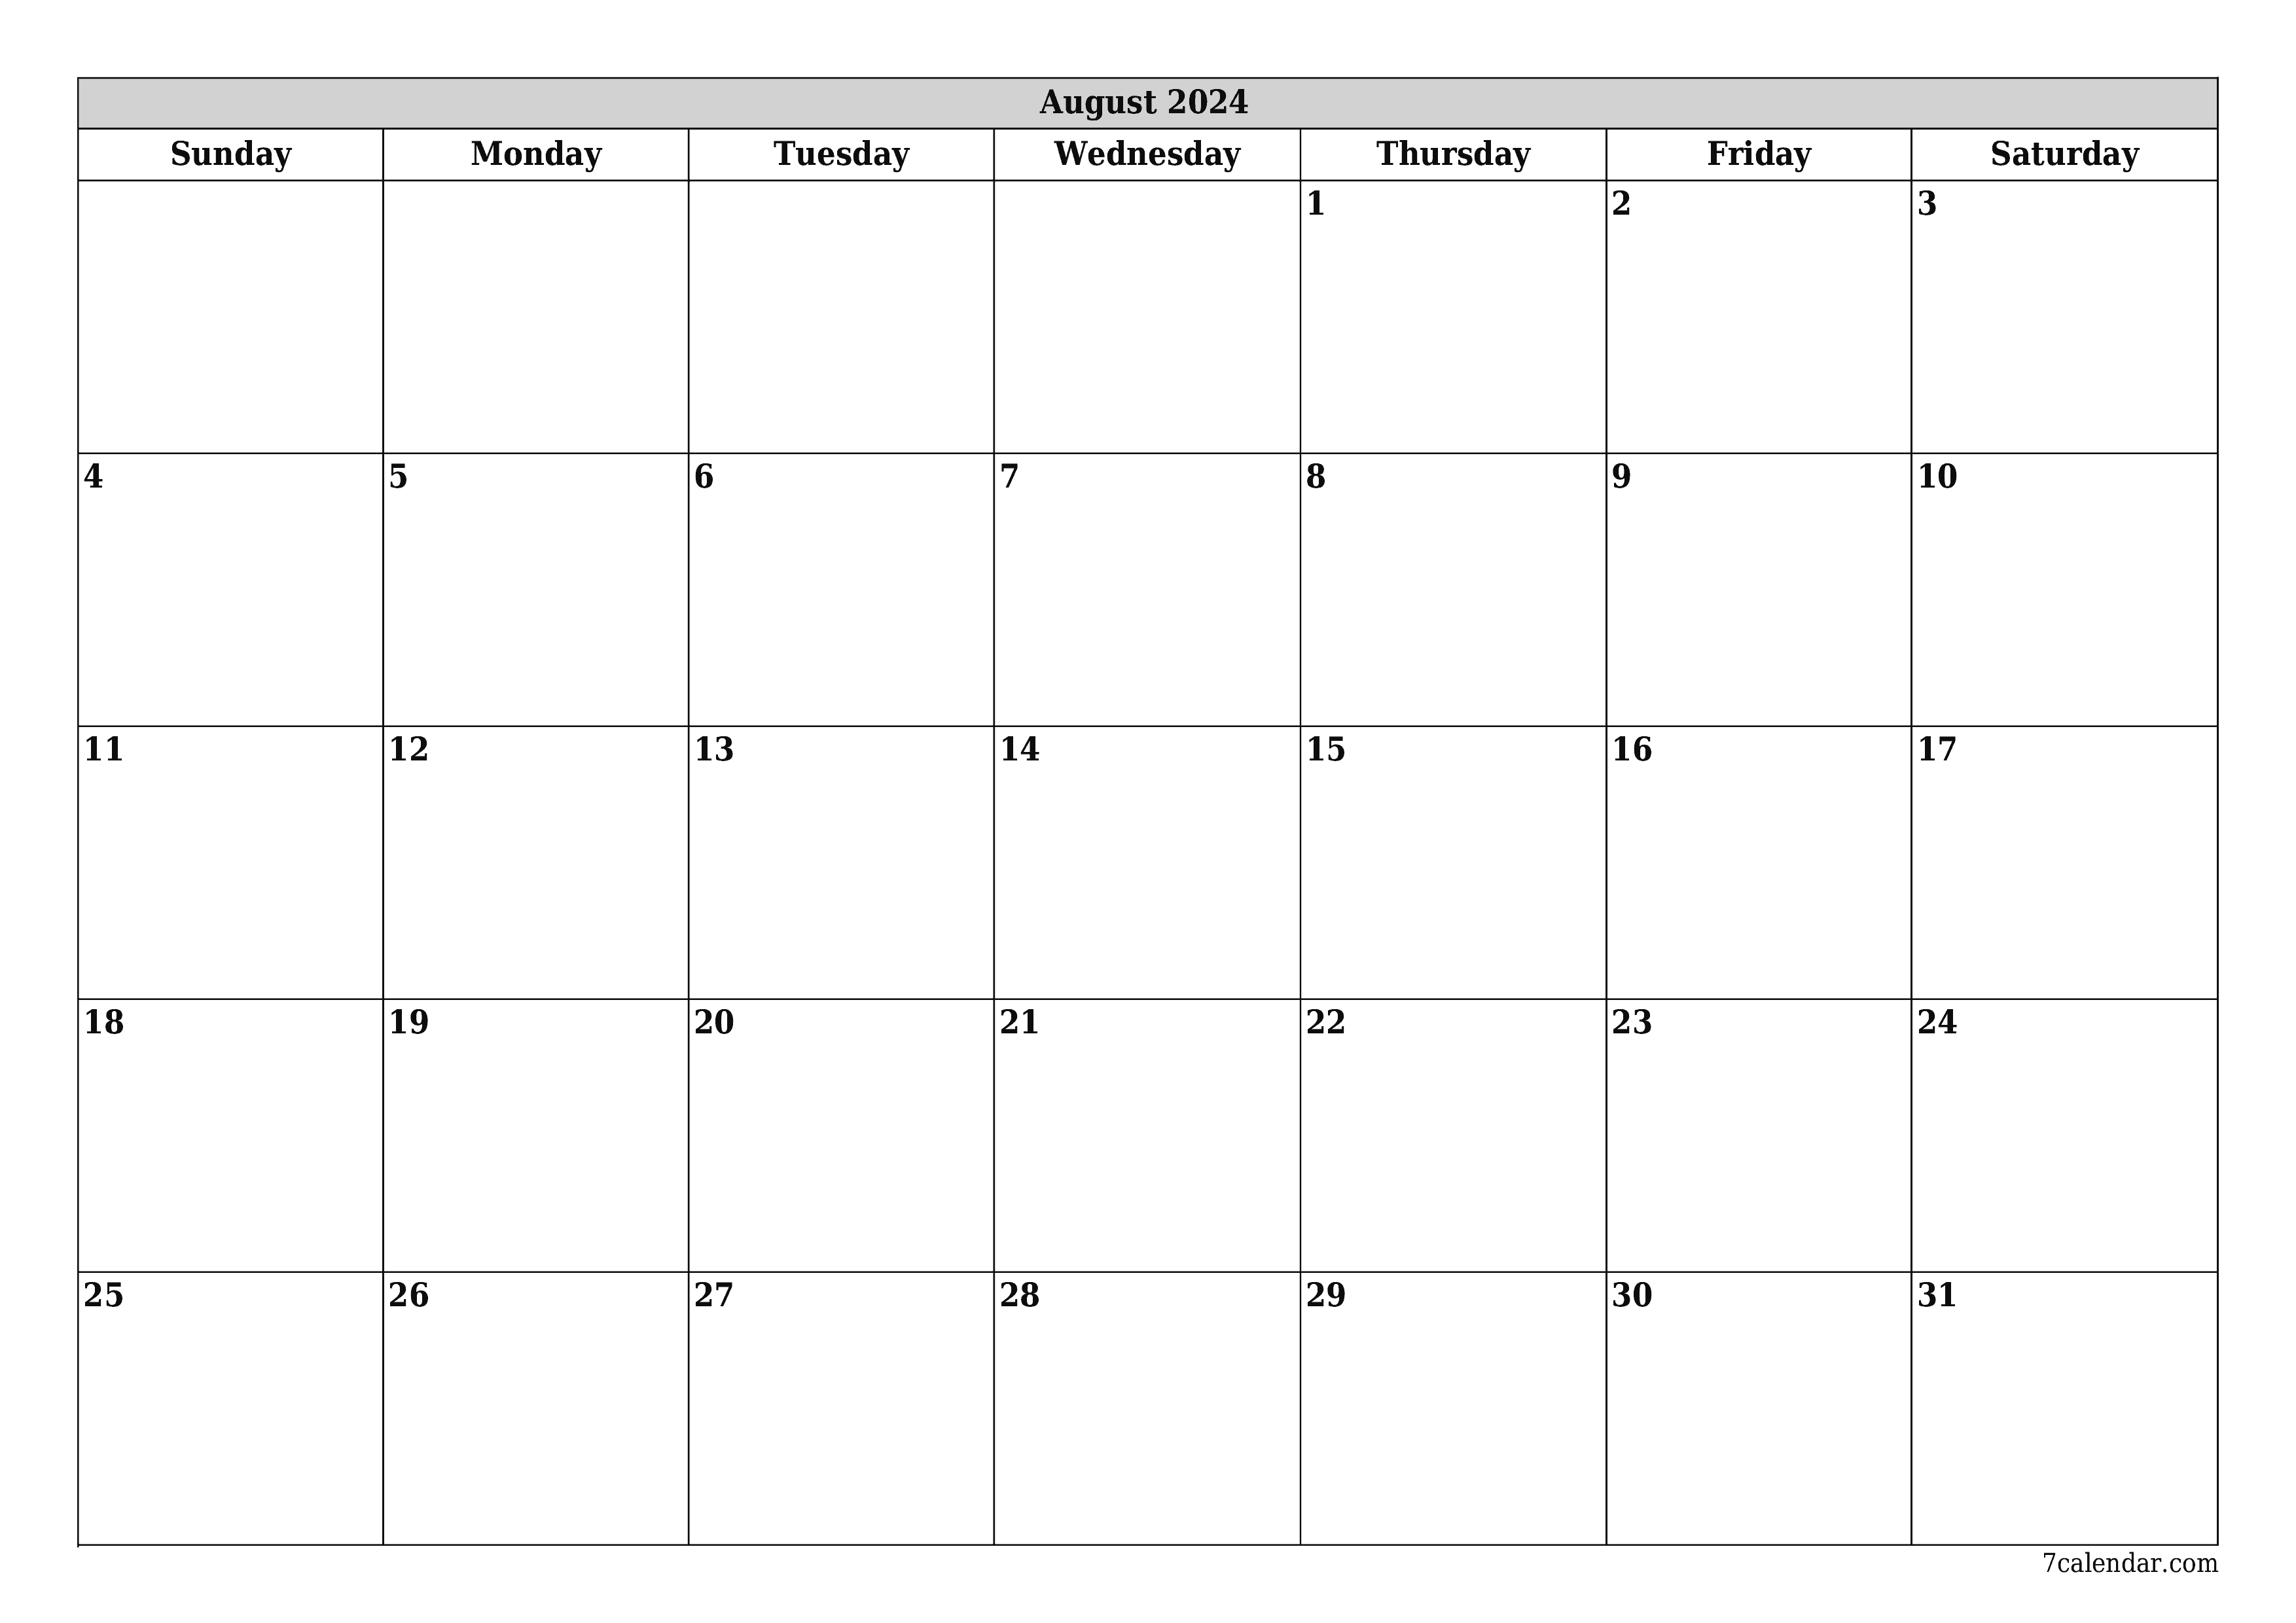 Blank calendar August 2024